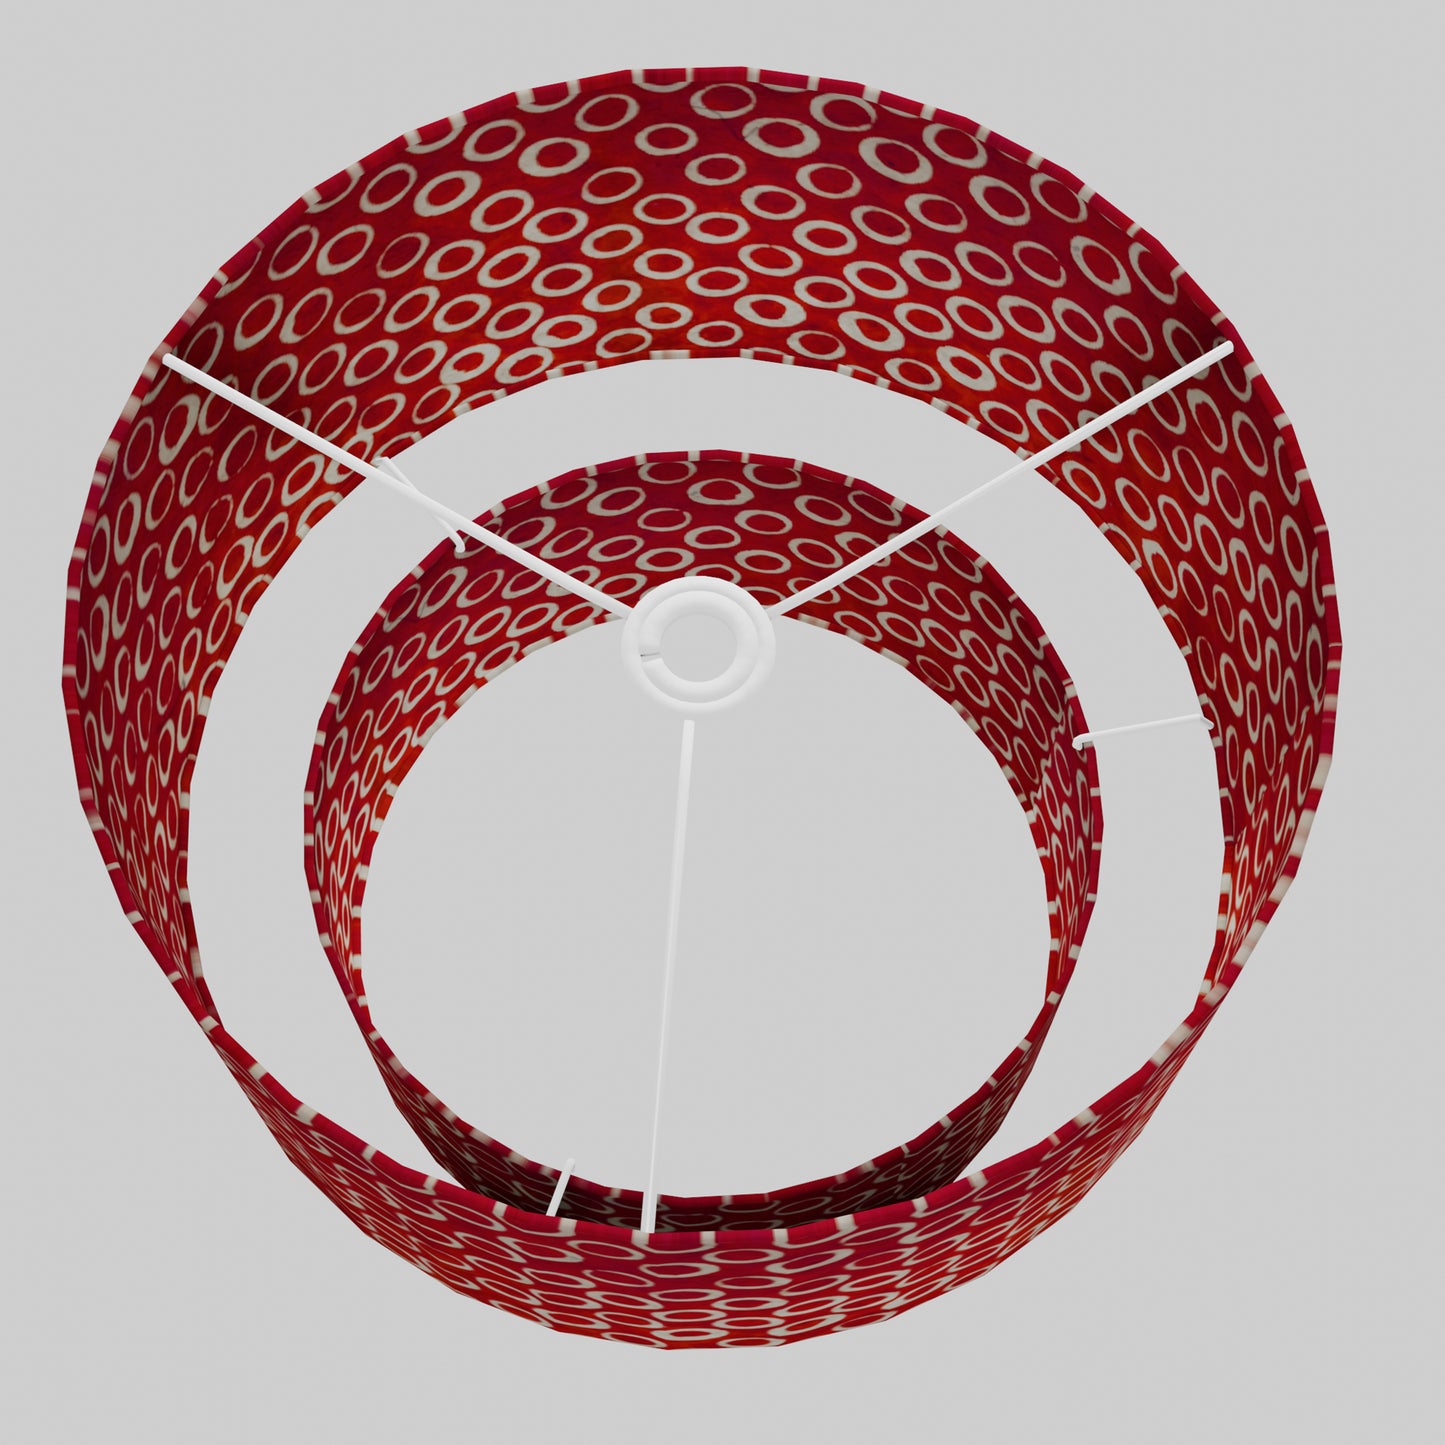 2 Tier Lamp Shade - P83 - Batik Red Circles, 40cm x 20cm & 30cm x 15cm